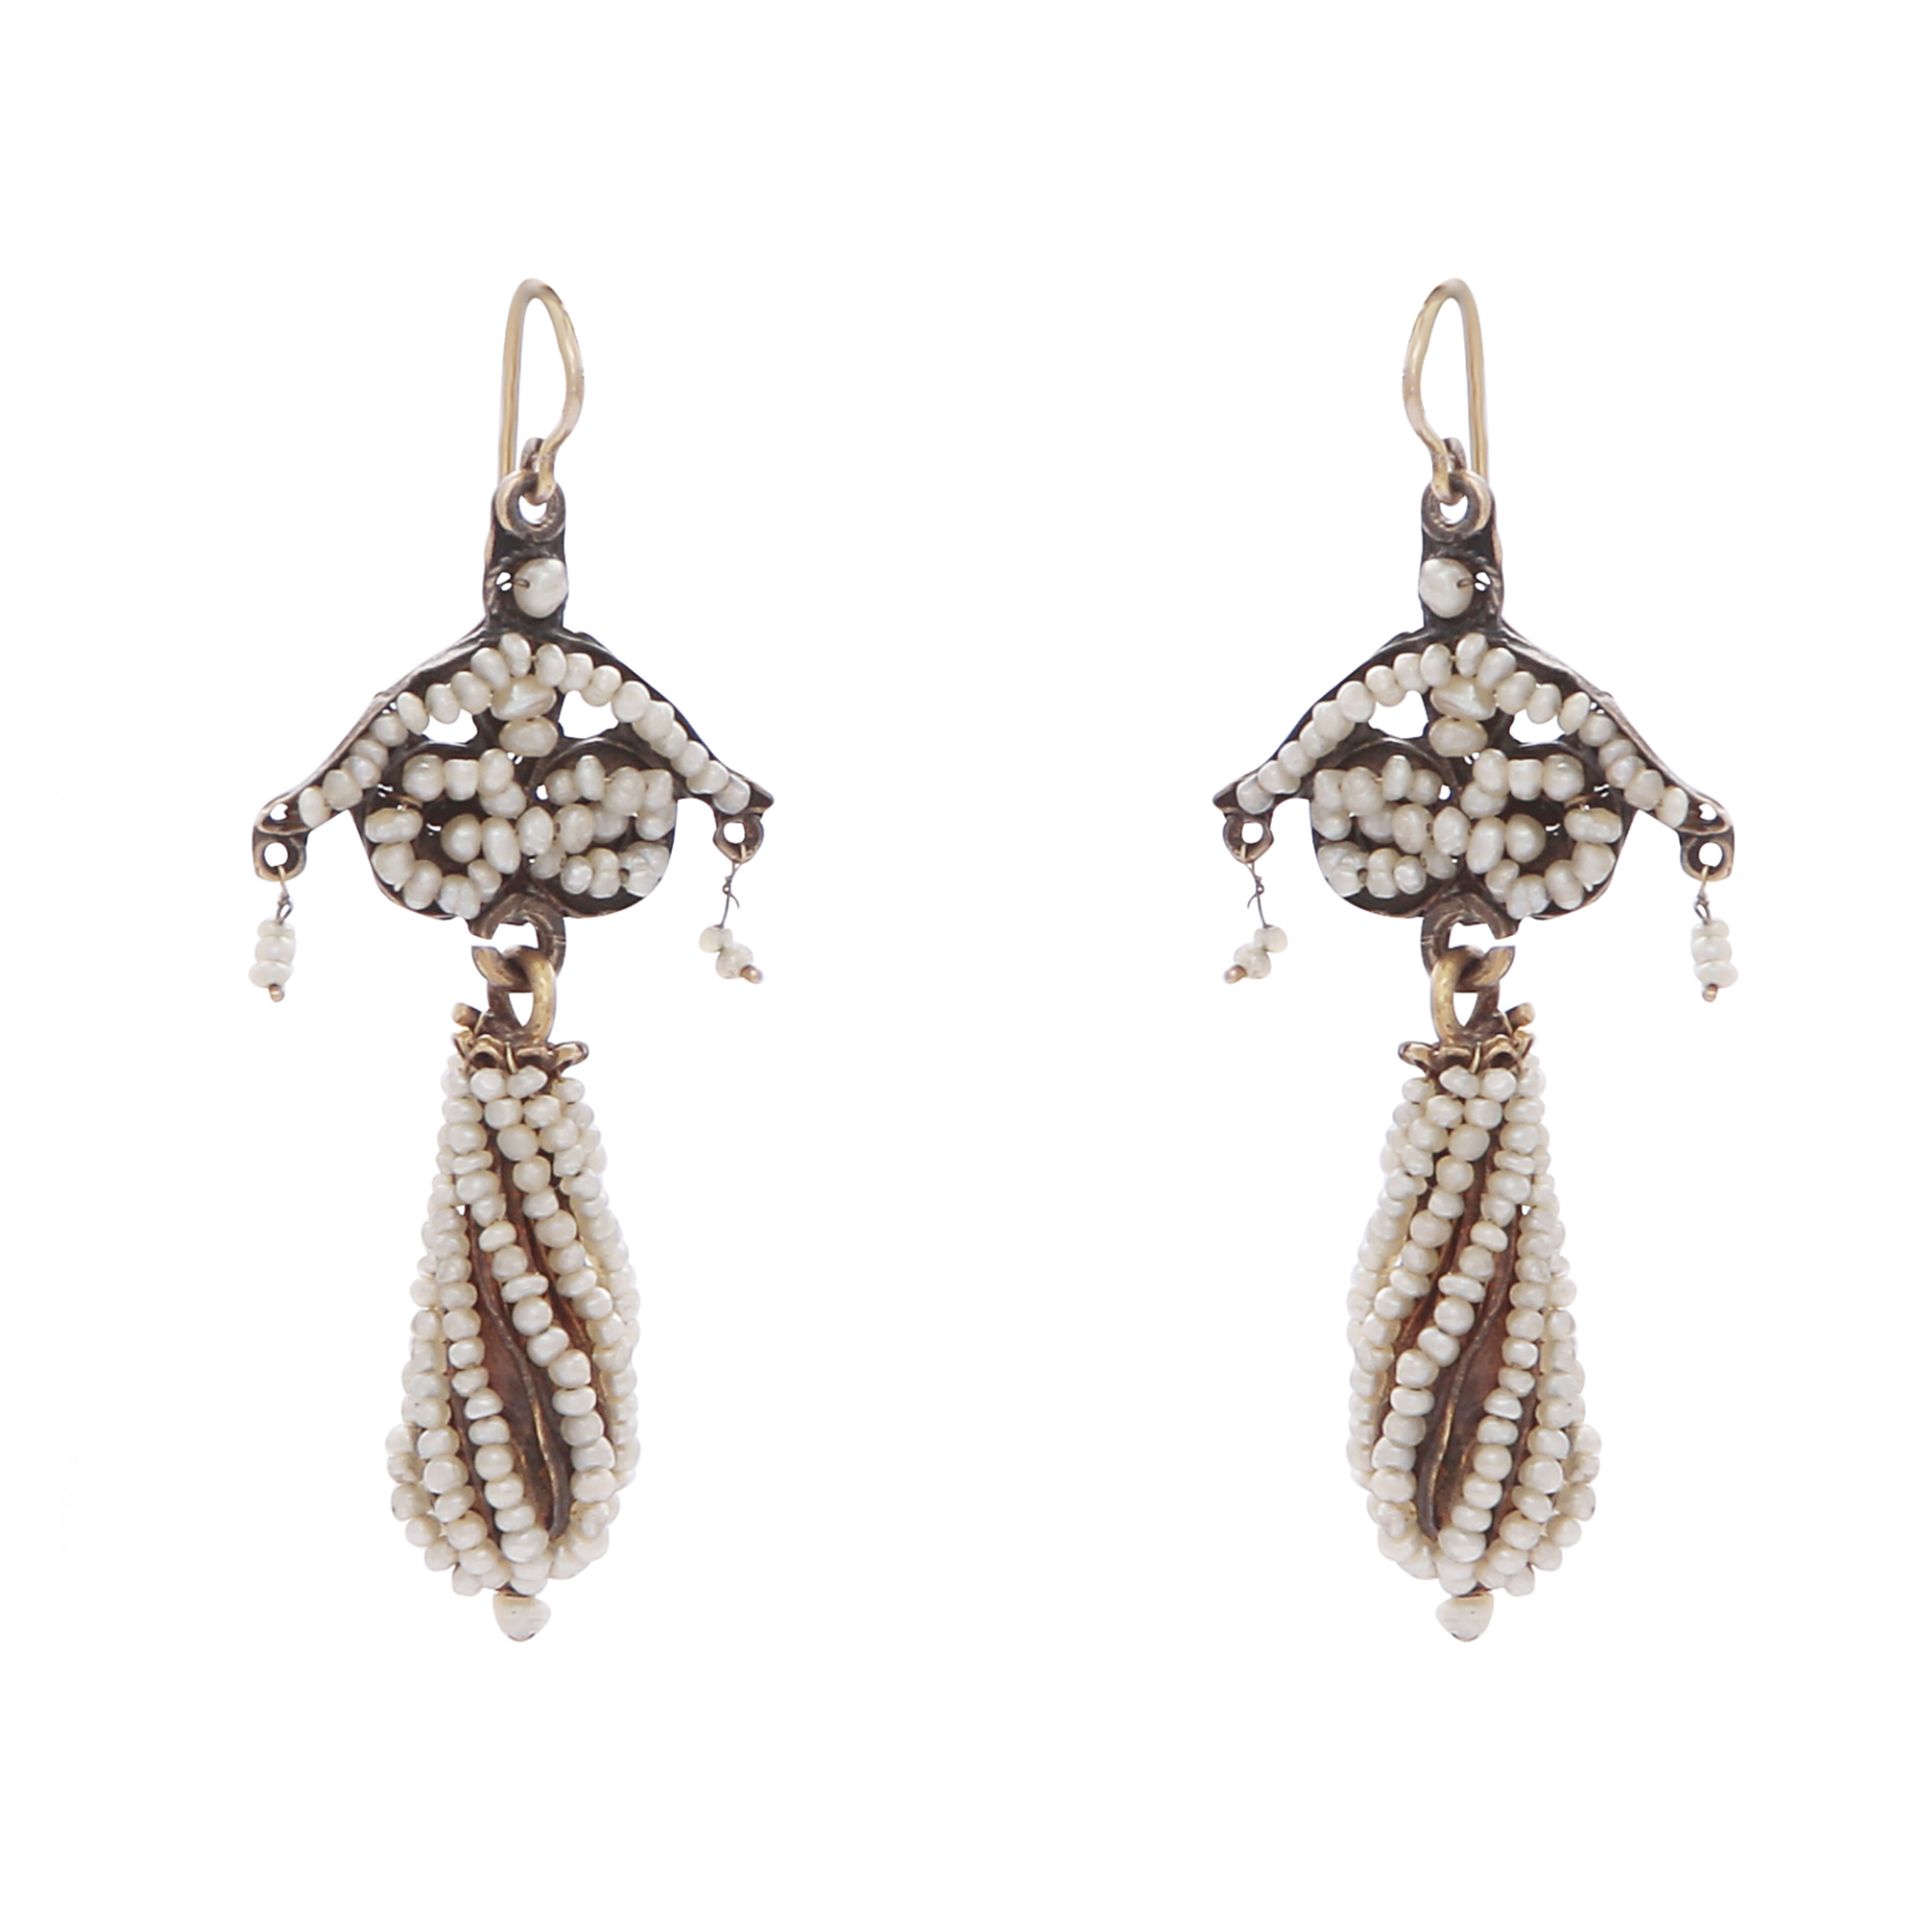 A pair of antique Georgian seed pearl drop earrings each designed as a swirling drop pendant